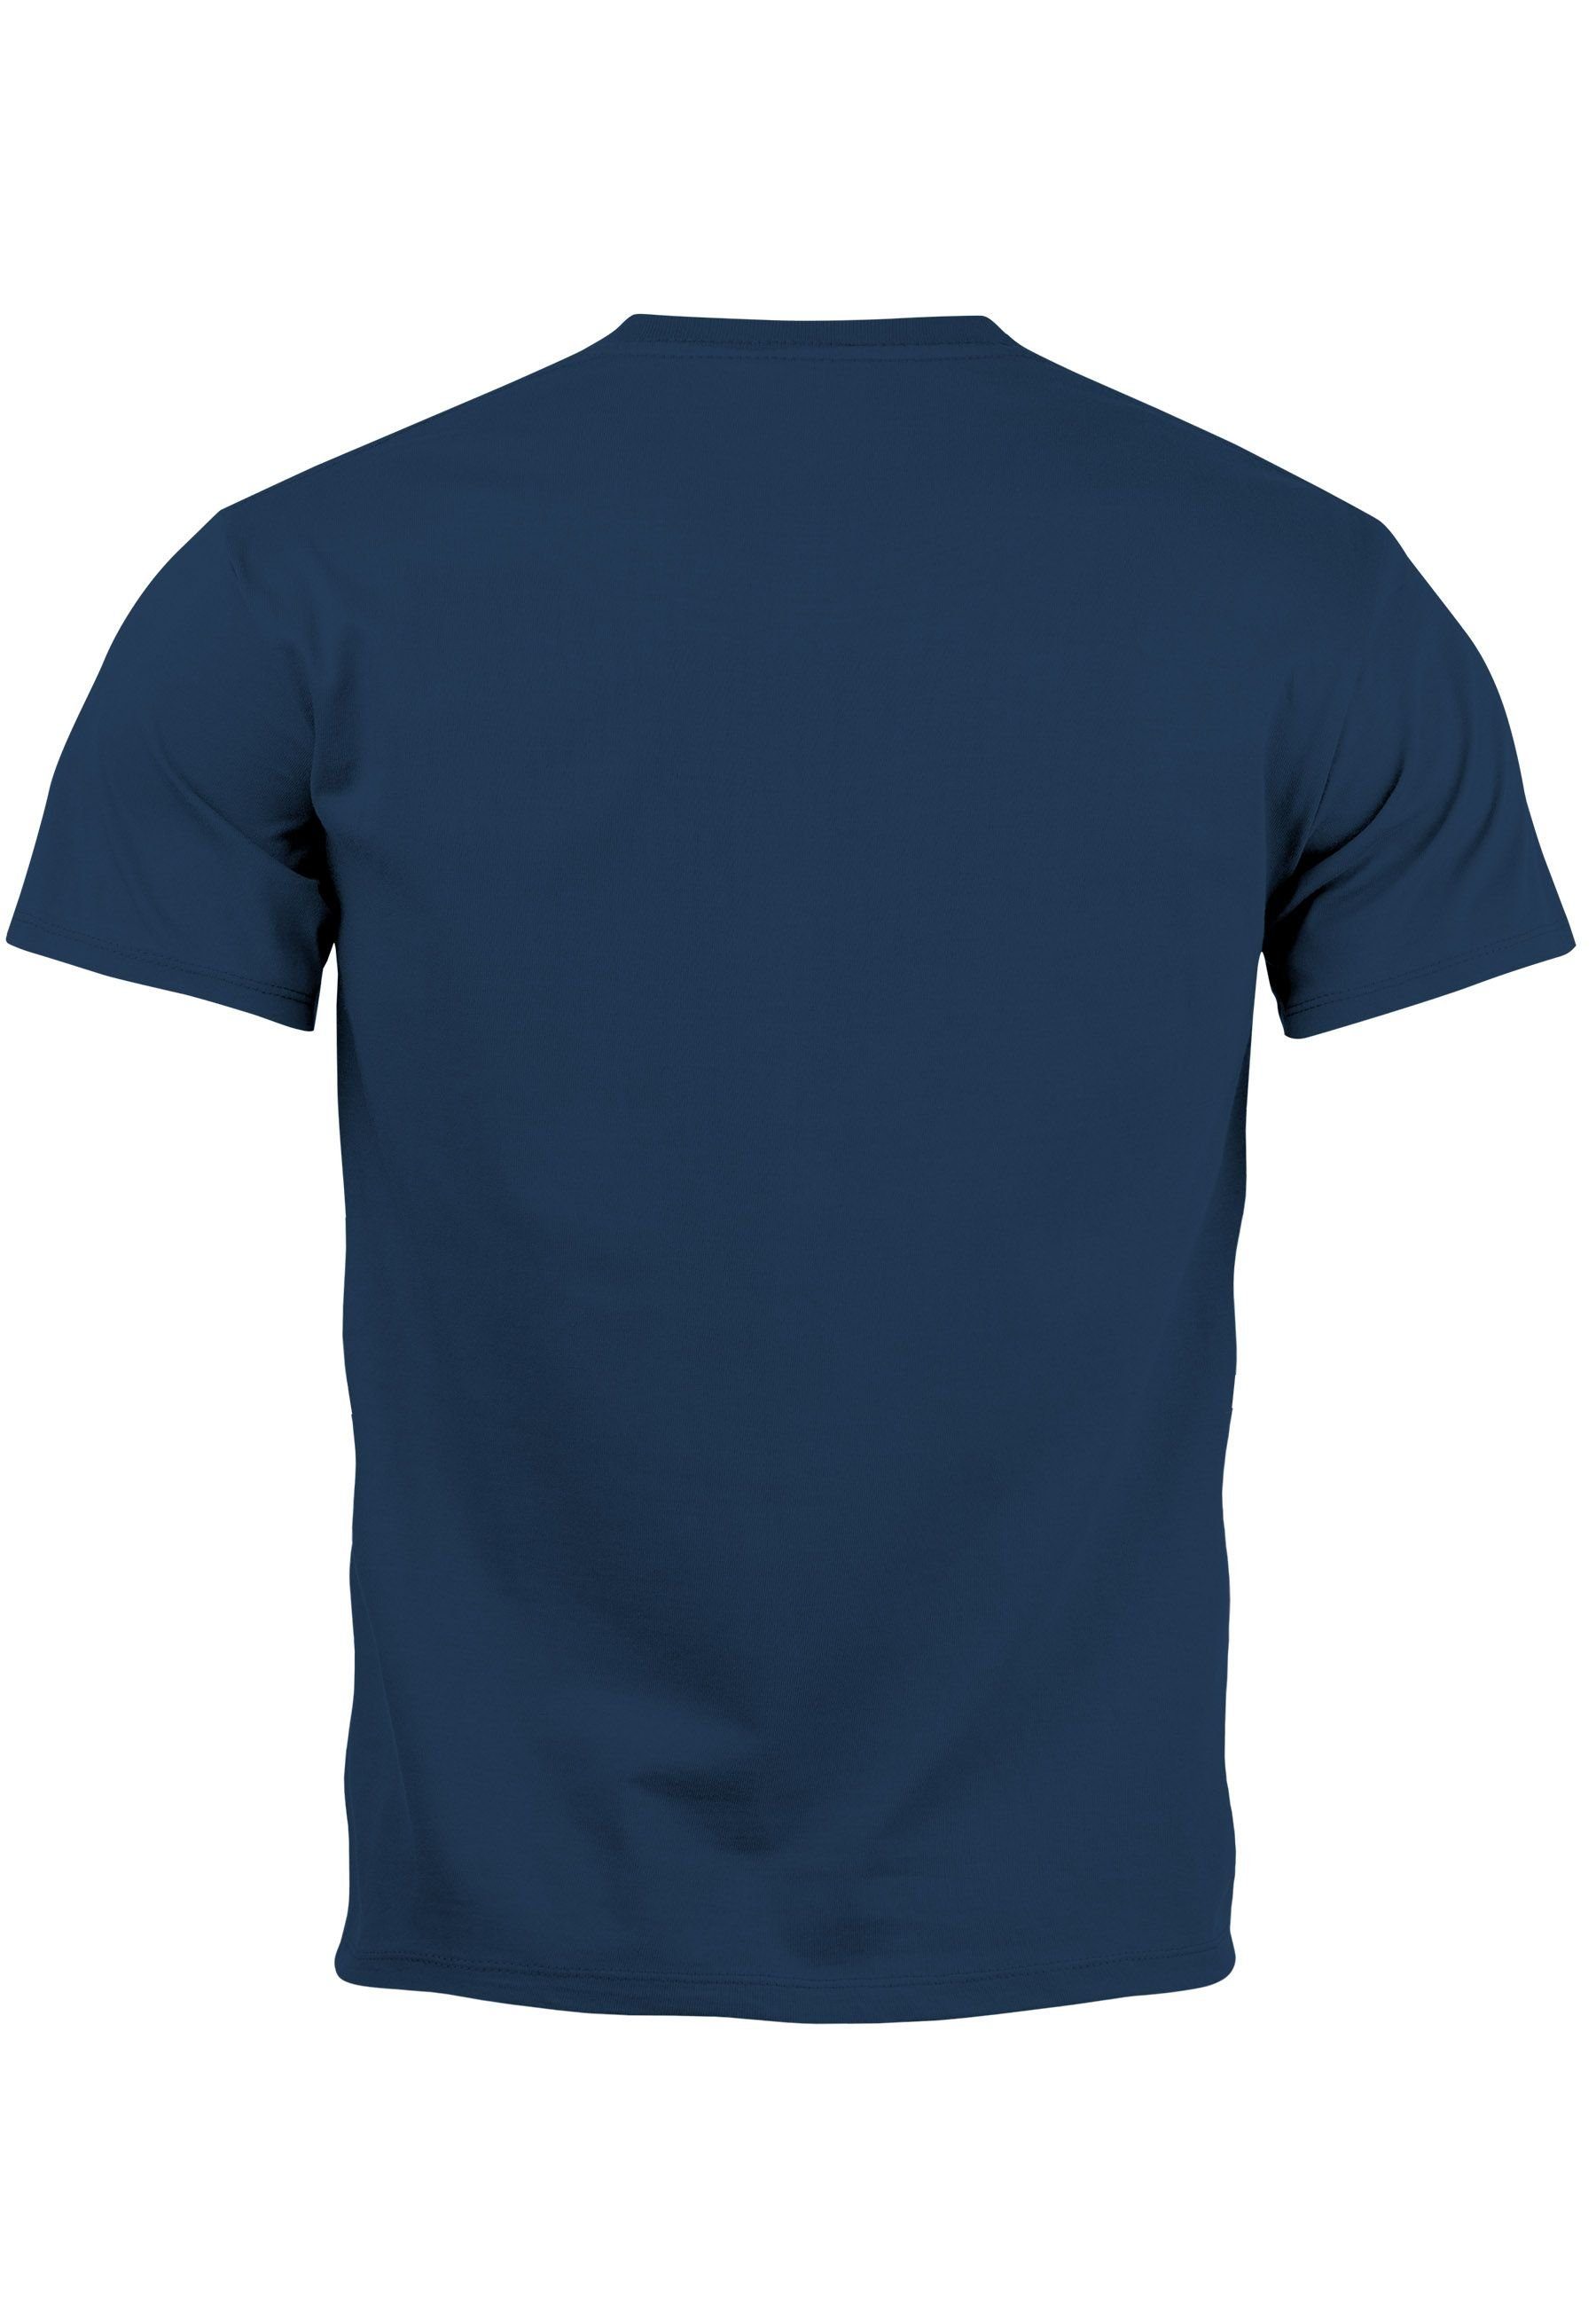 Print Schmetterling T-Shirt Geometric mit the Spruch Butterlfy navy Not Design Neverless Print-Shirt Herren